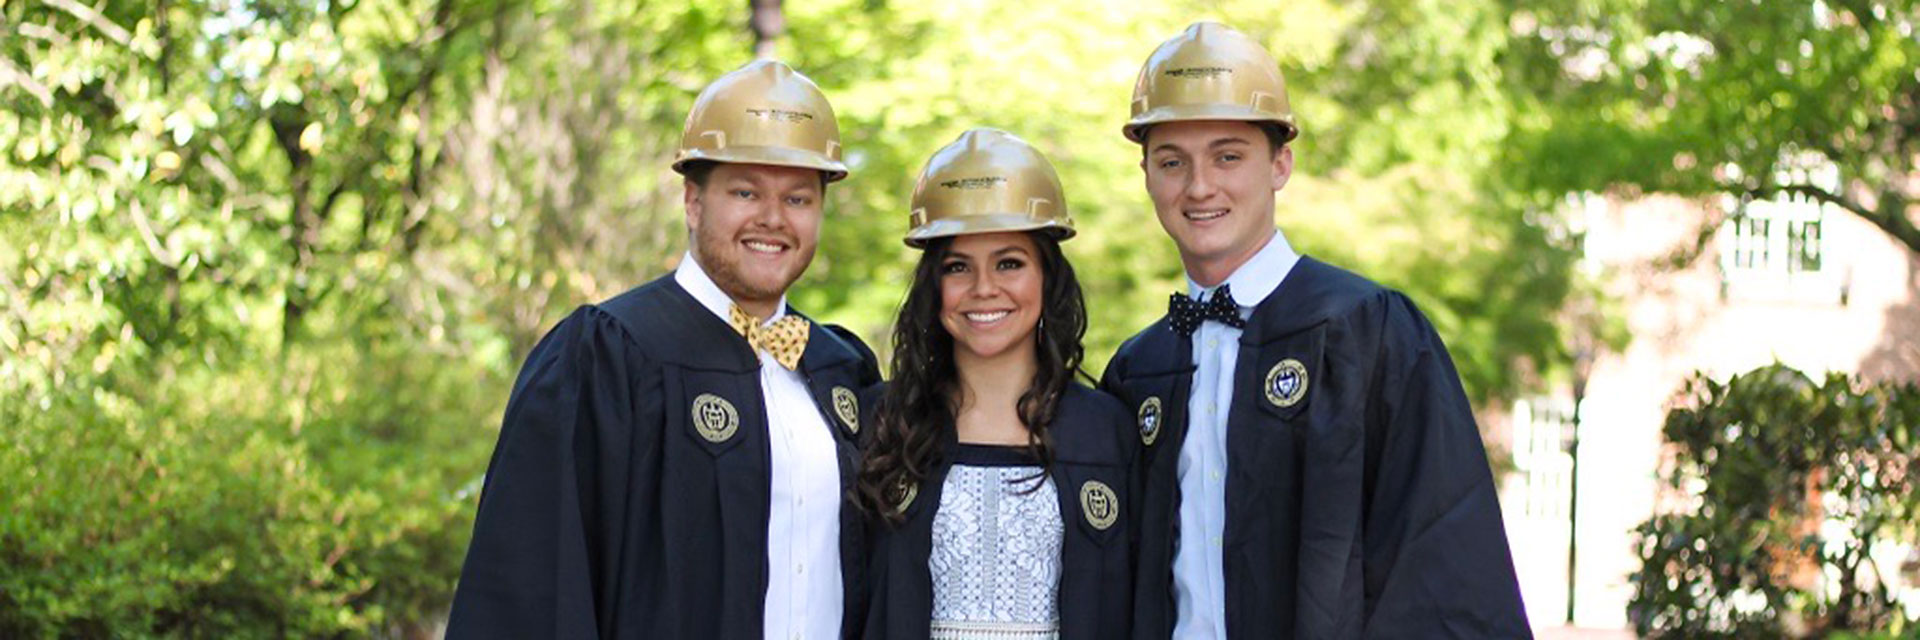 Undergraduate students in graduation robes wearing hard hats.